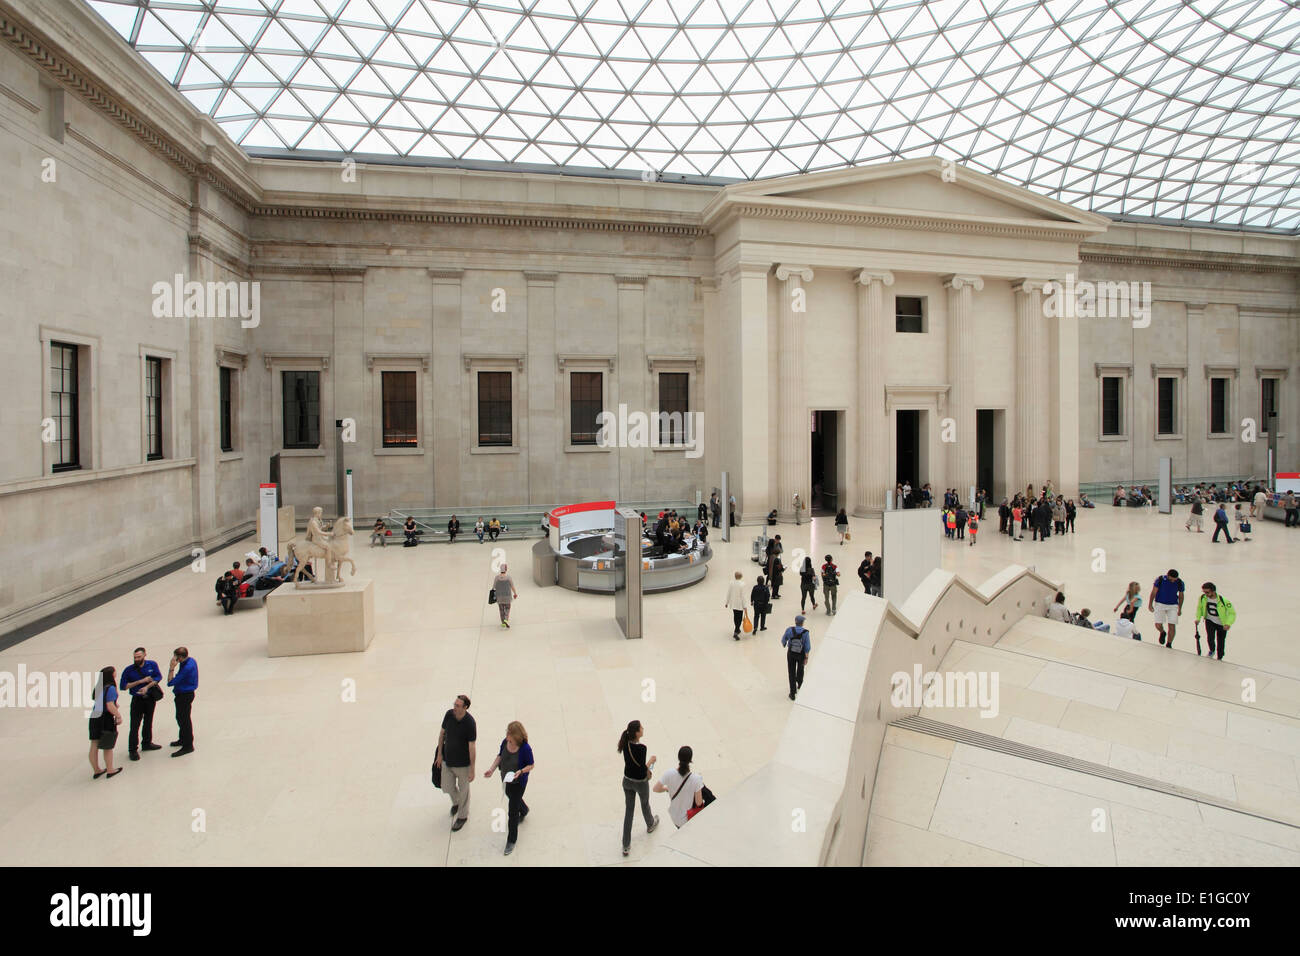 UK, England, London, British Museum, Great Court, people, Norman Foster architect, Stock Photo